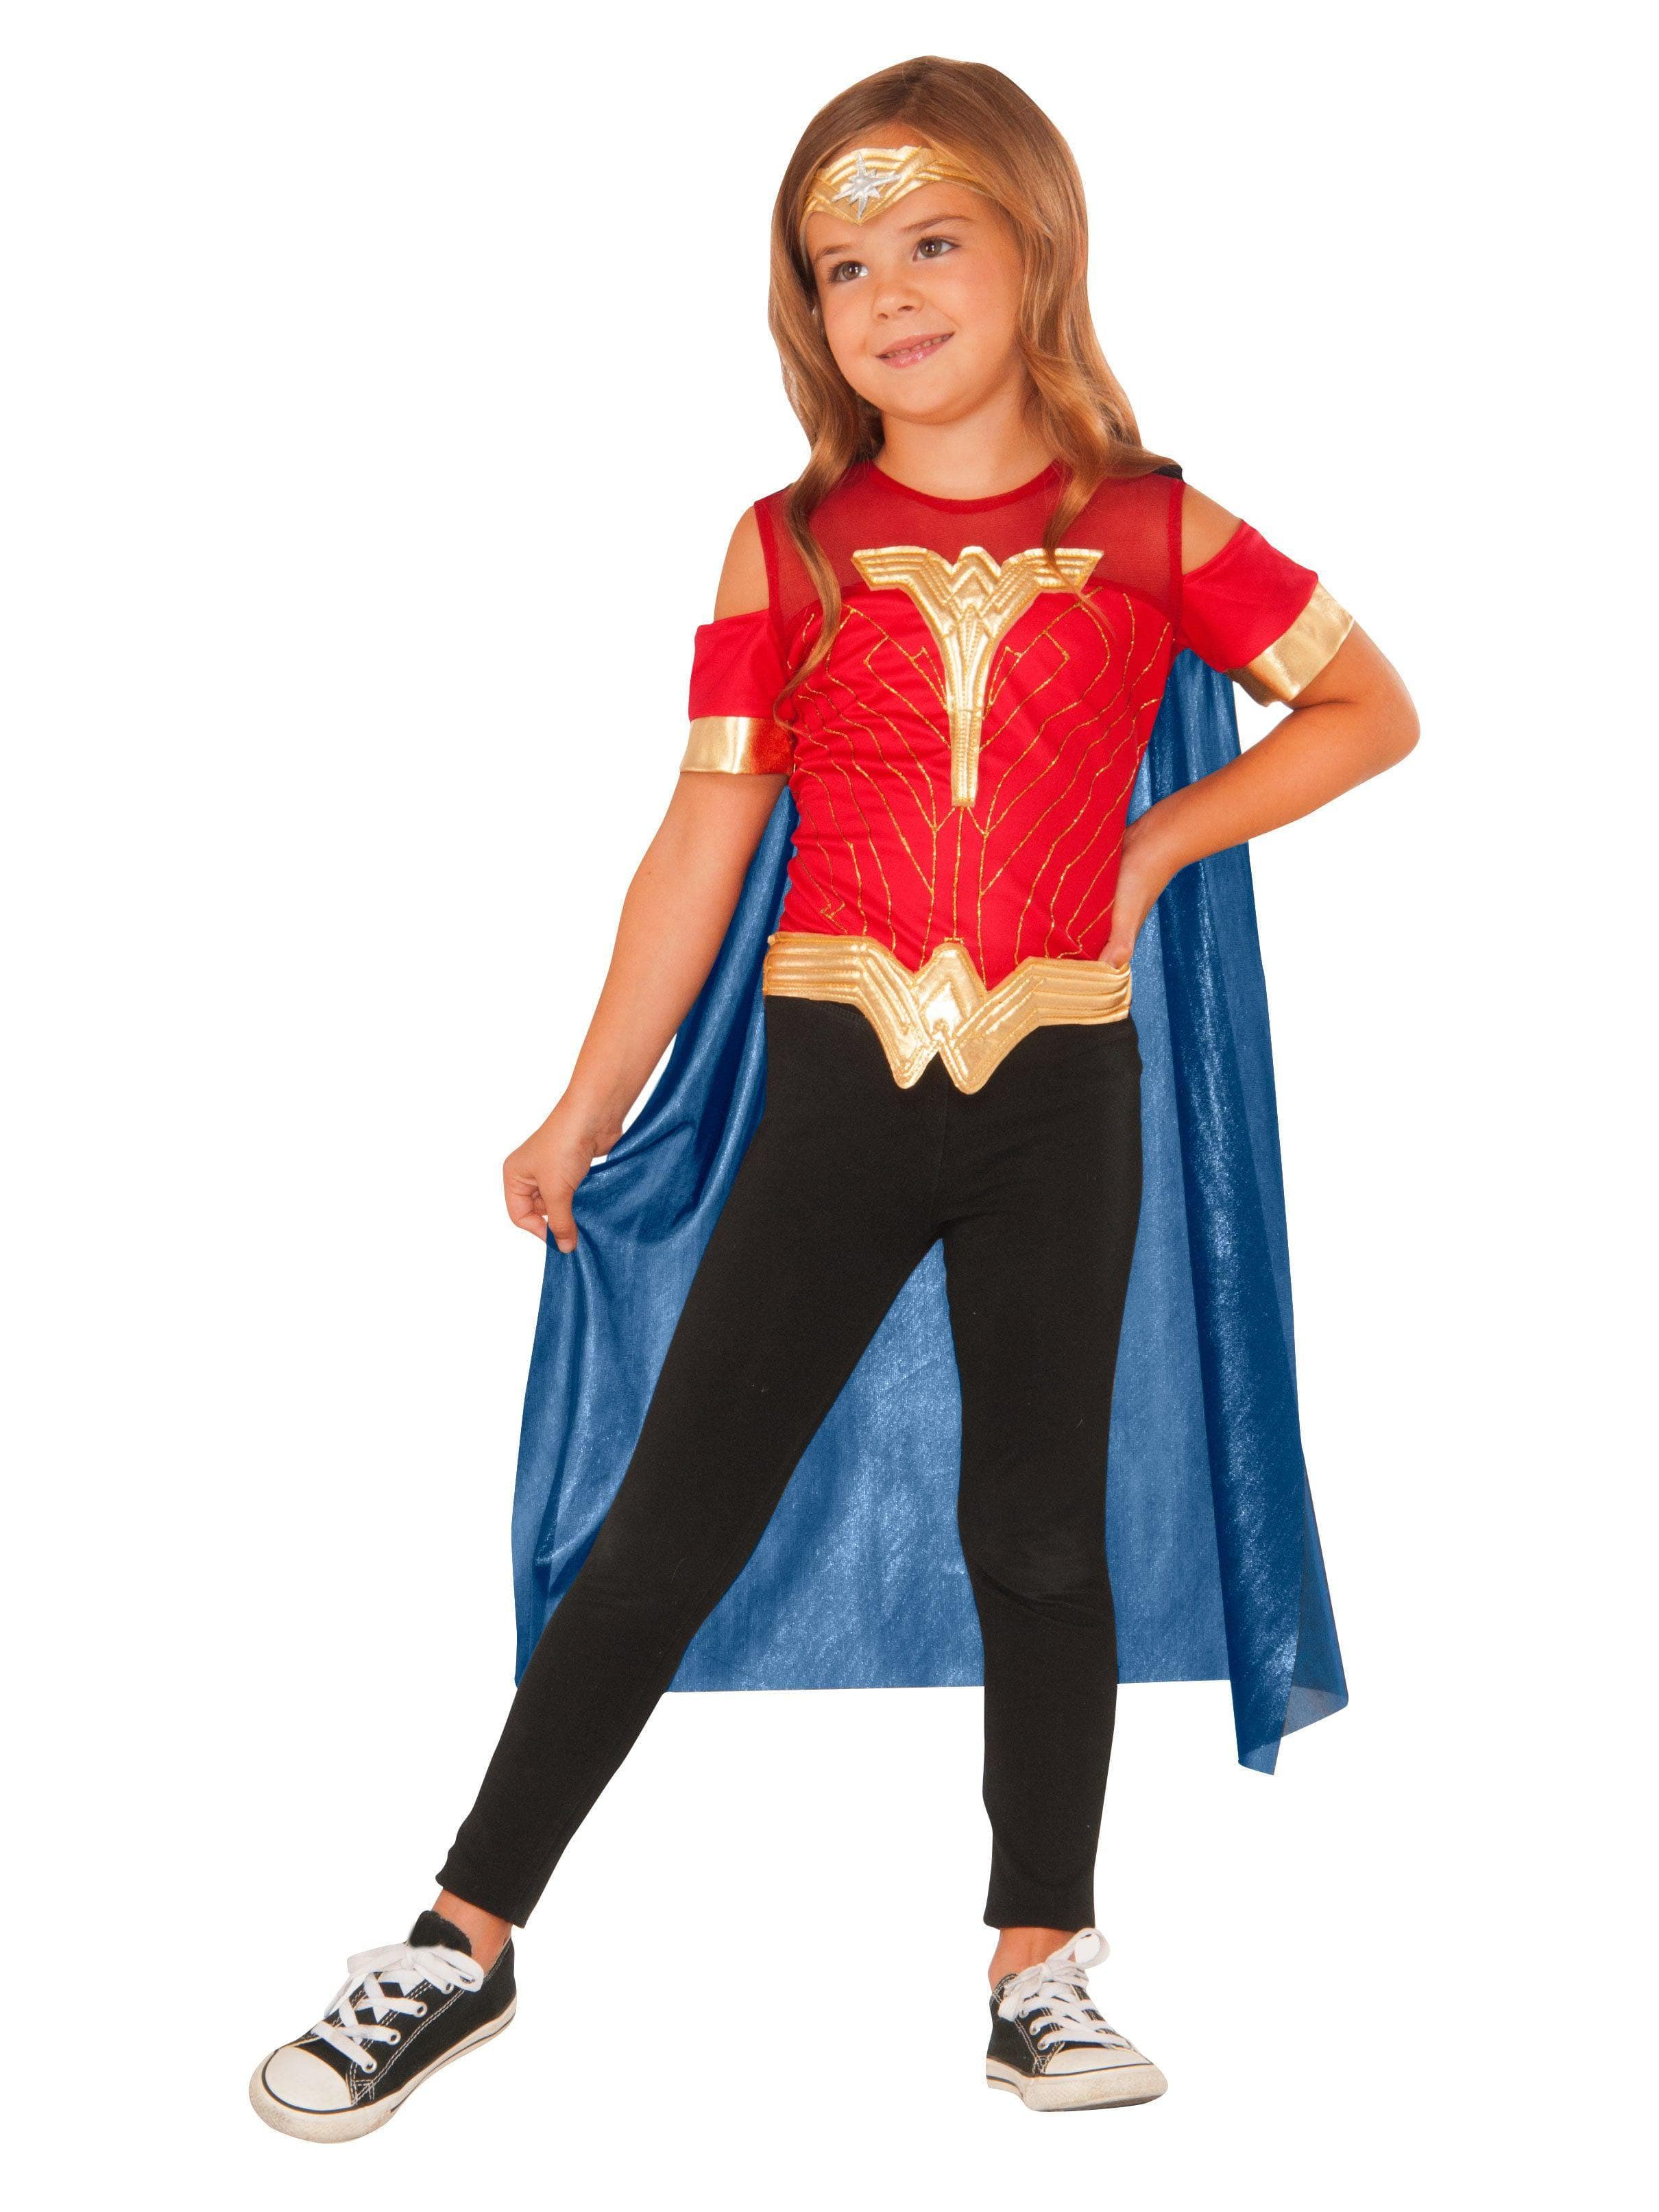 Kid's Justice League Wonder Woman Top Set - costumes.com